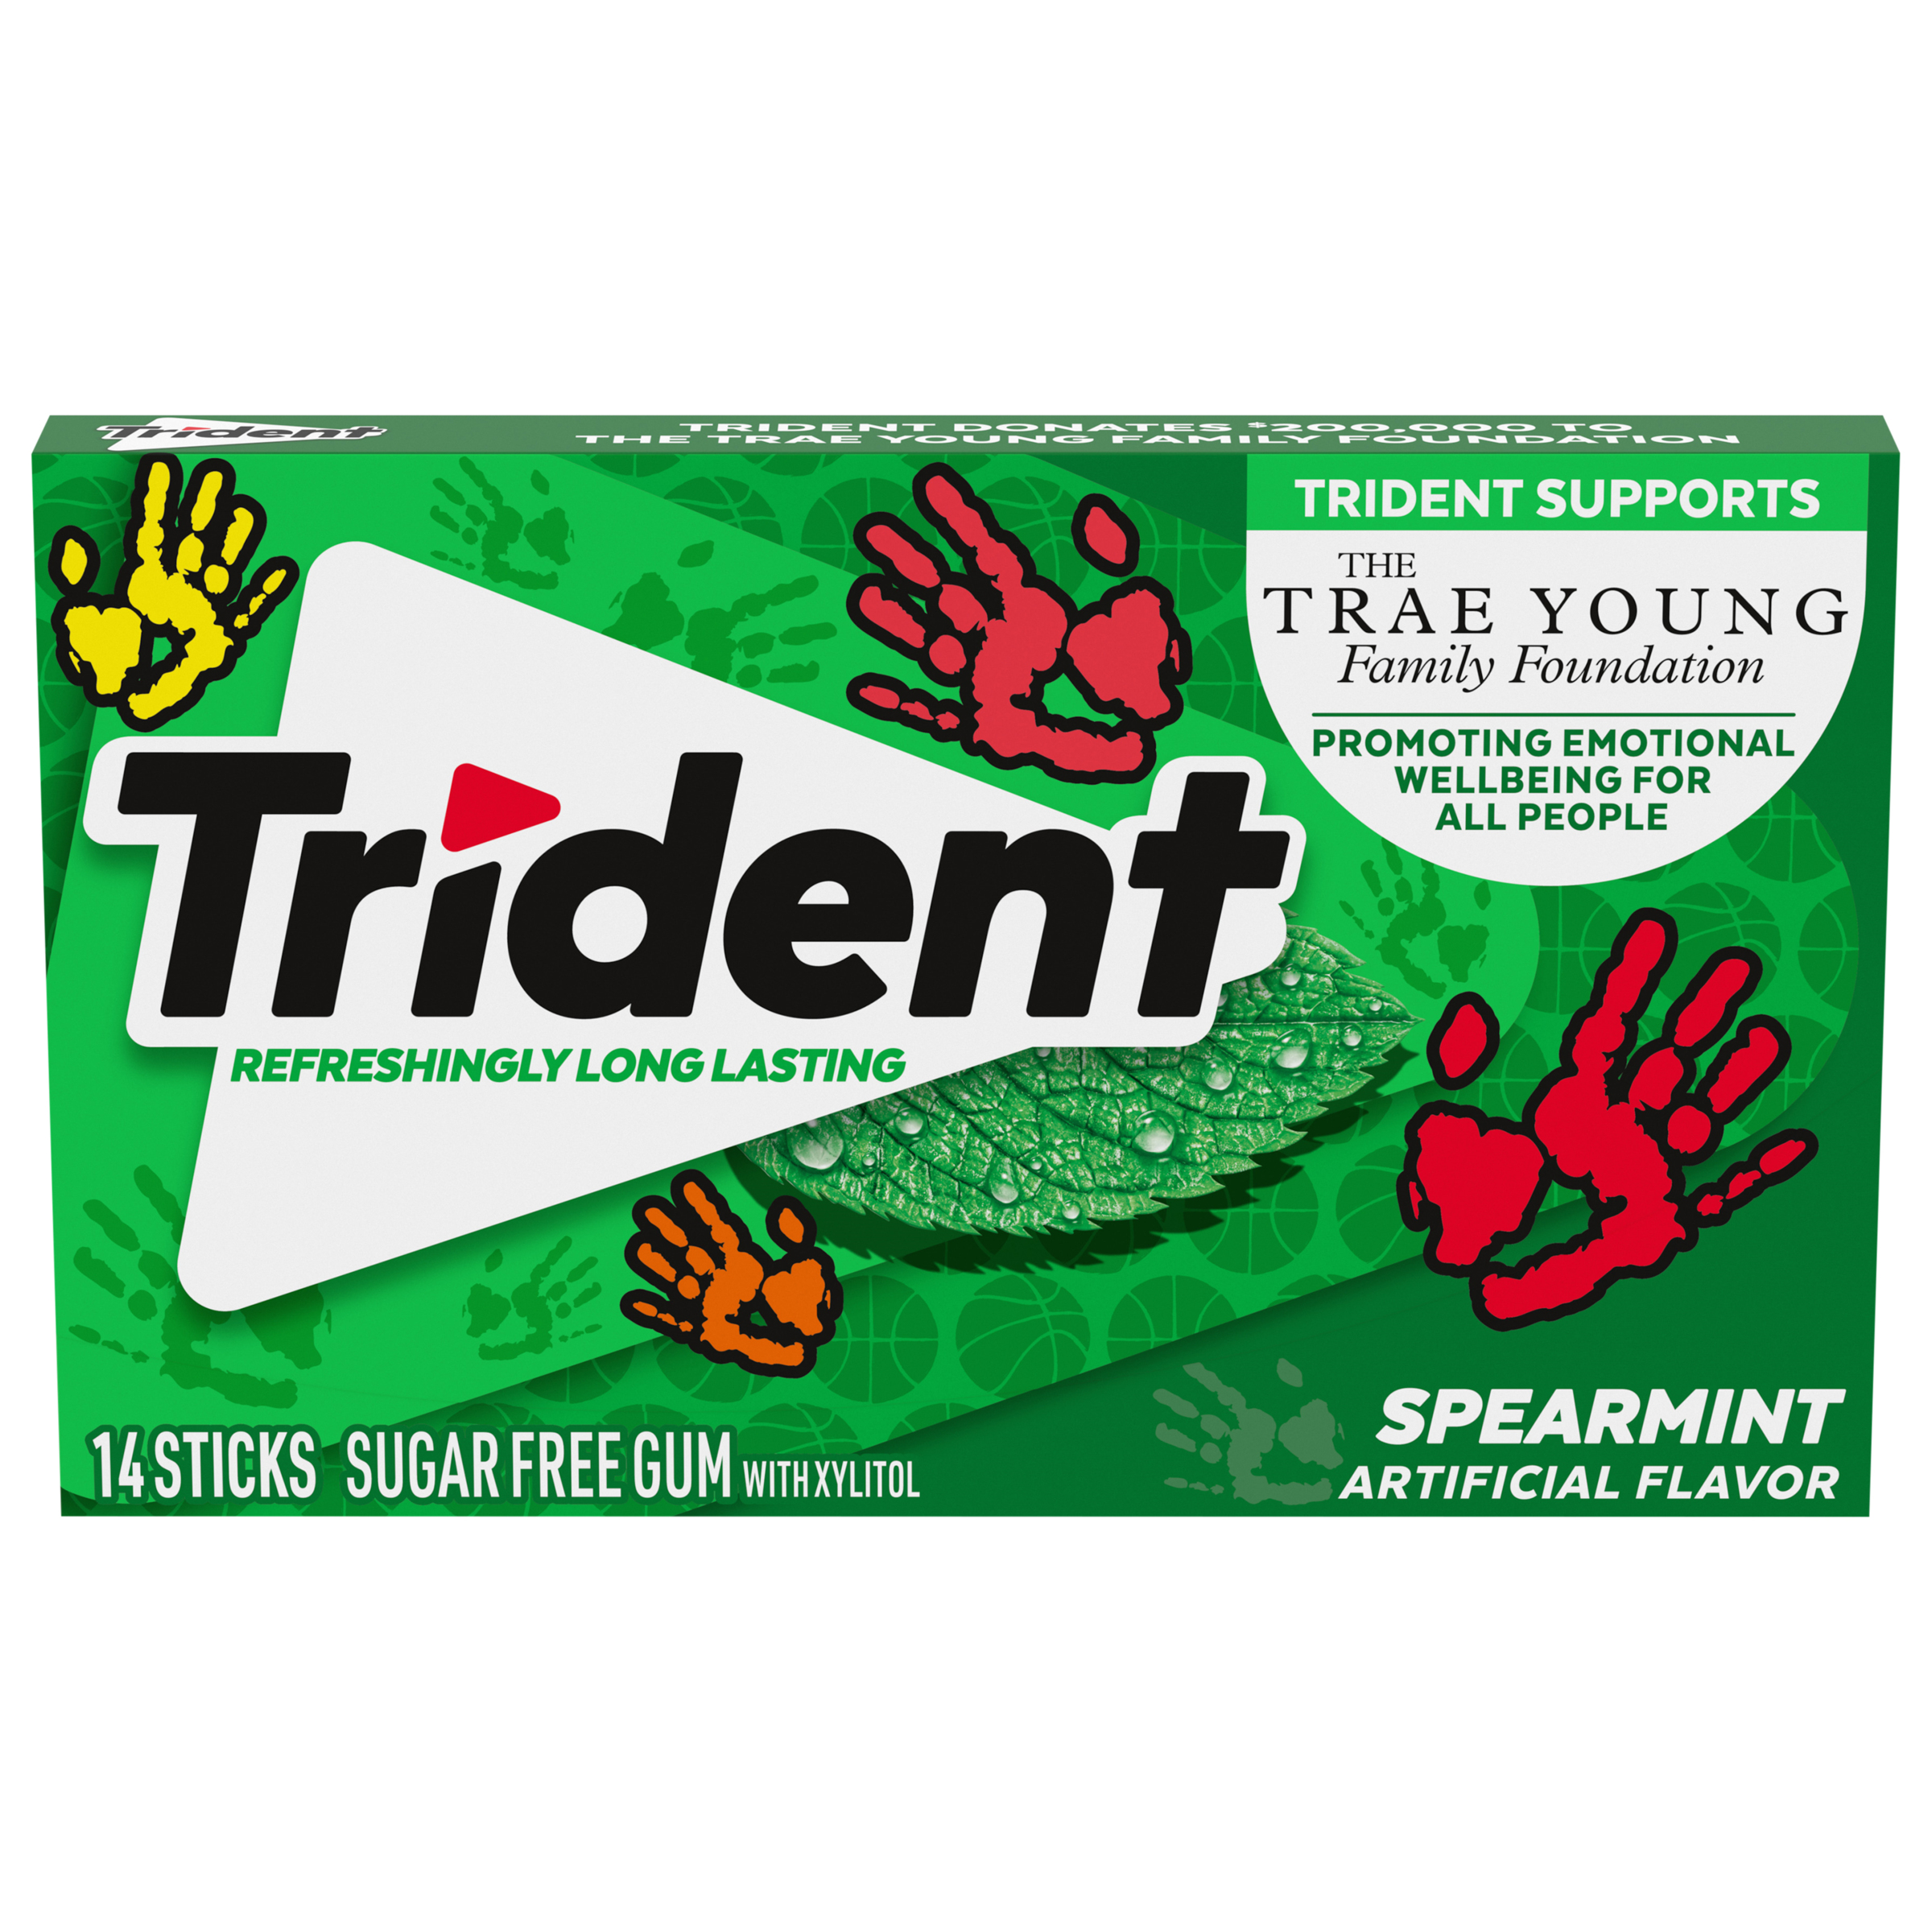 TRIDENT Spearmint Sugar Free Gum 14PCS 12x12